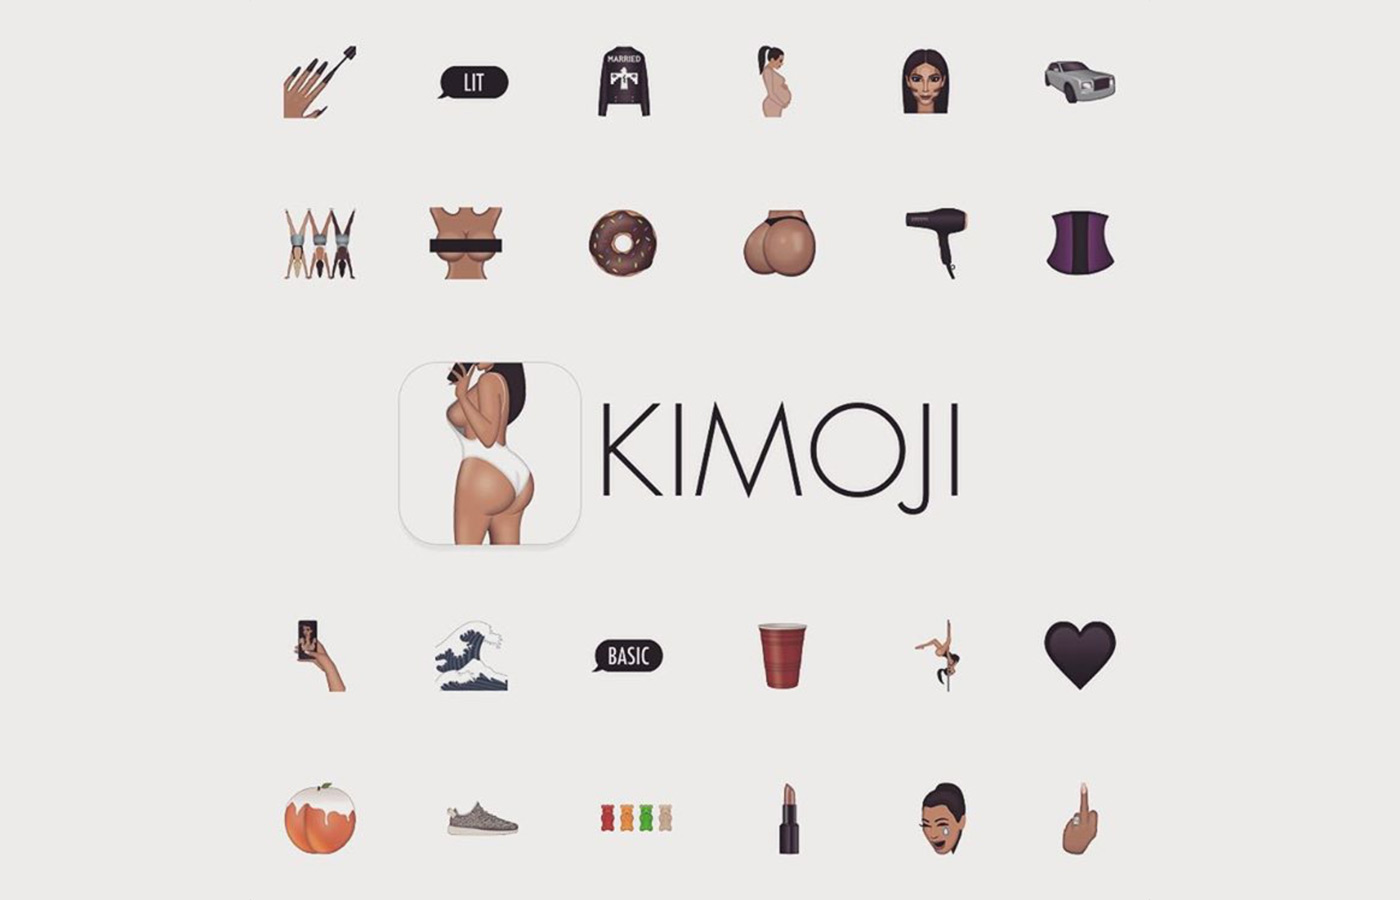 Kim Kardashian cashes in with her own emoji app